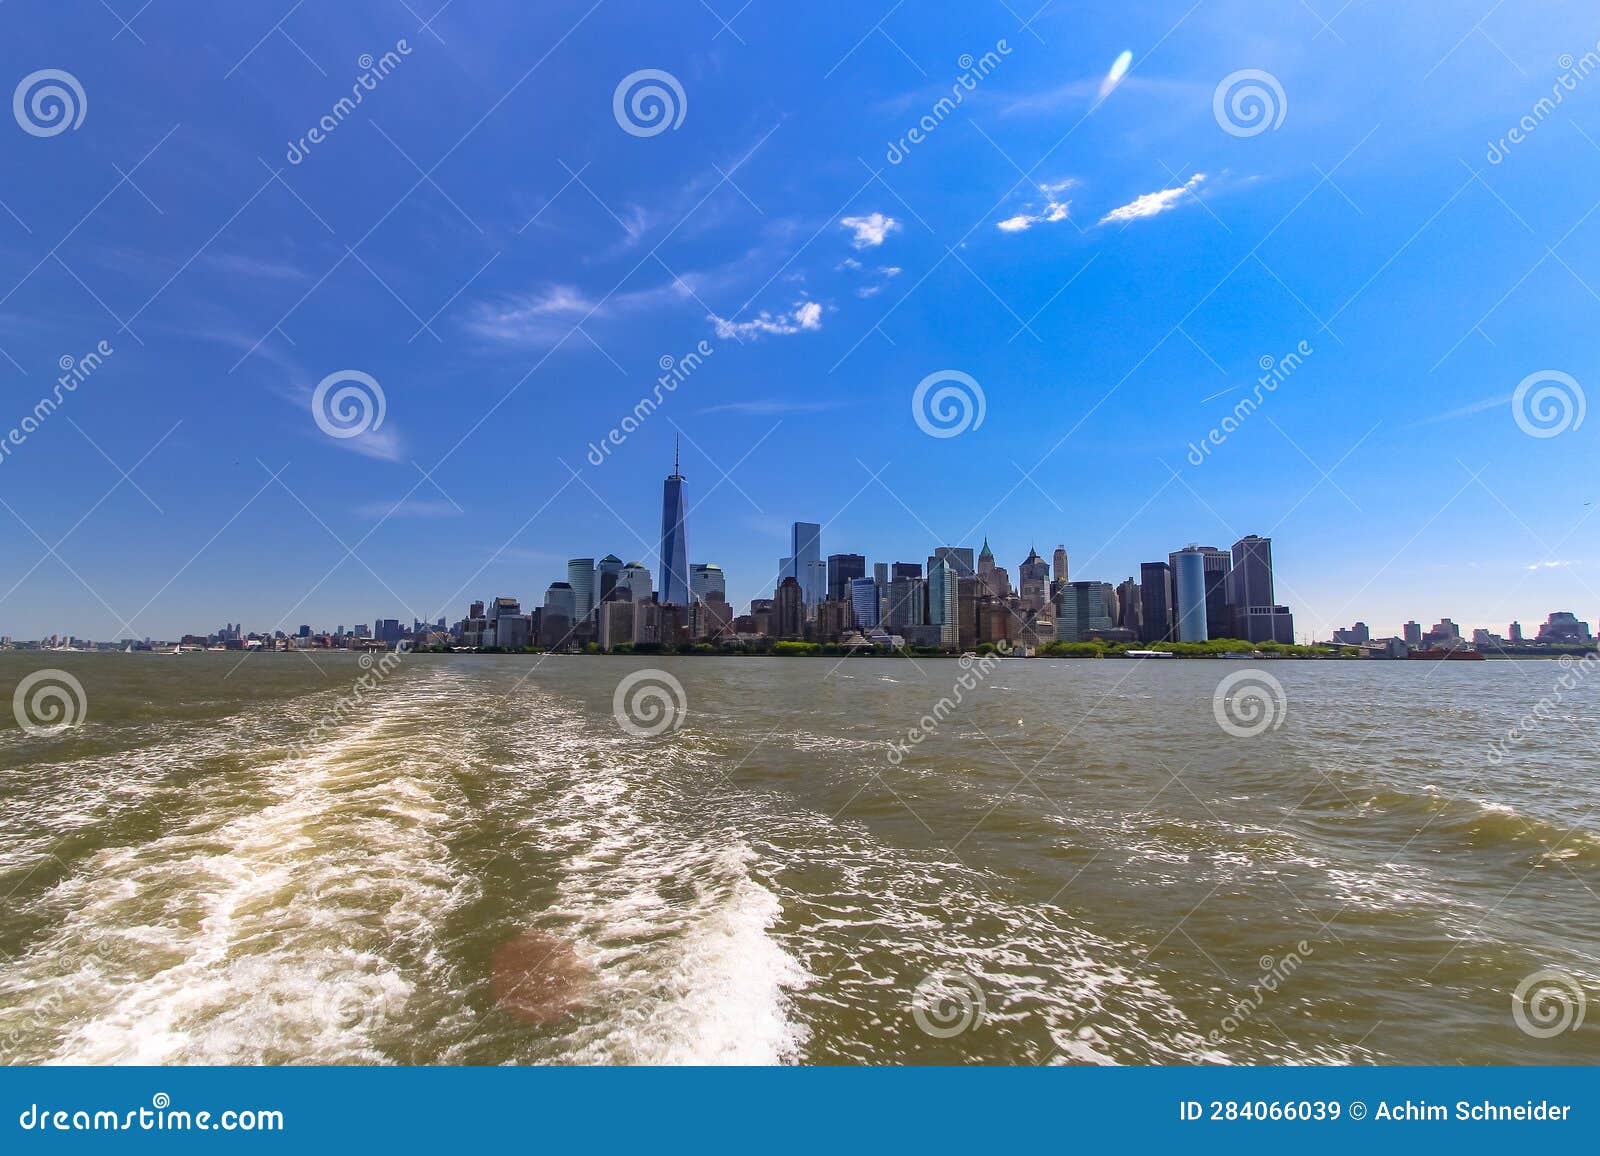 waterfront skyline with one world trade center, manhattan, new york, usa